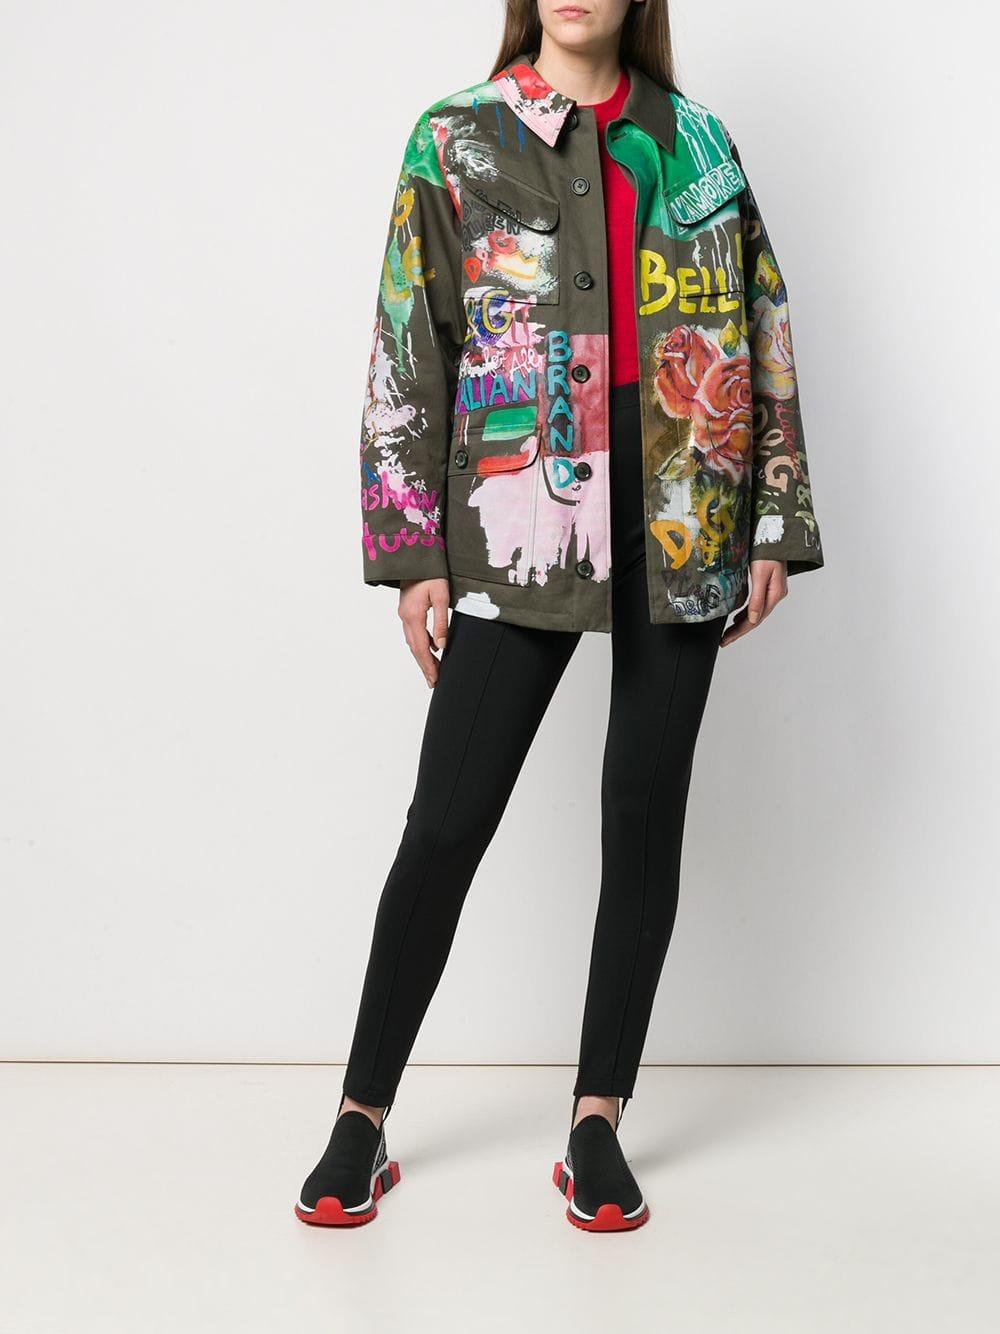 Dolce & Gabbana Graffiti Art Print Jacket in Green - Lyst